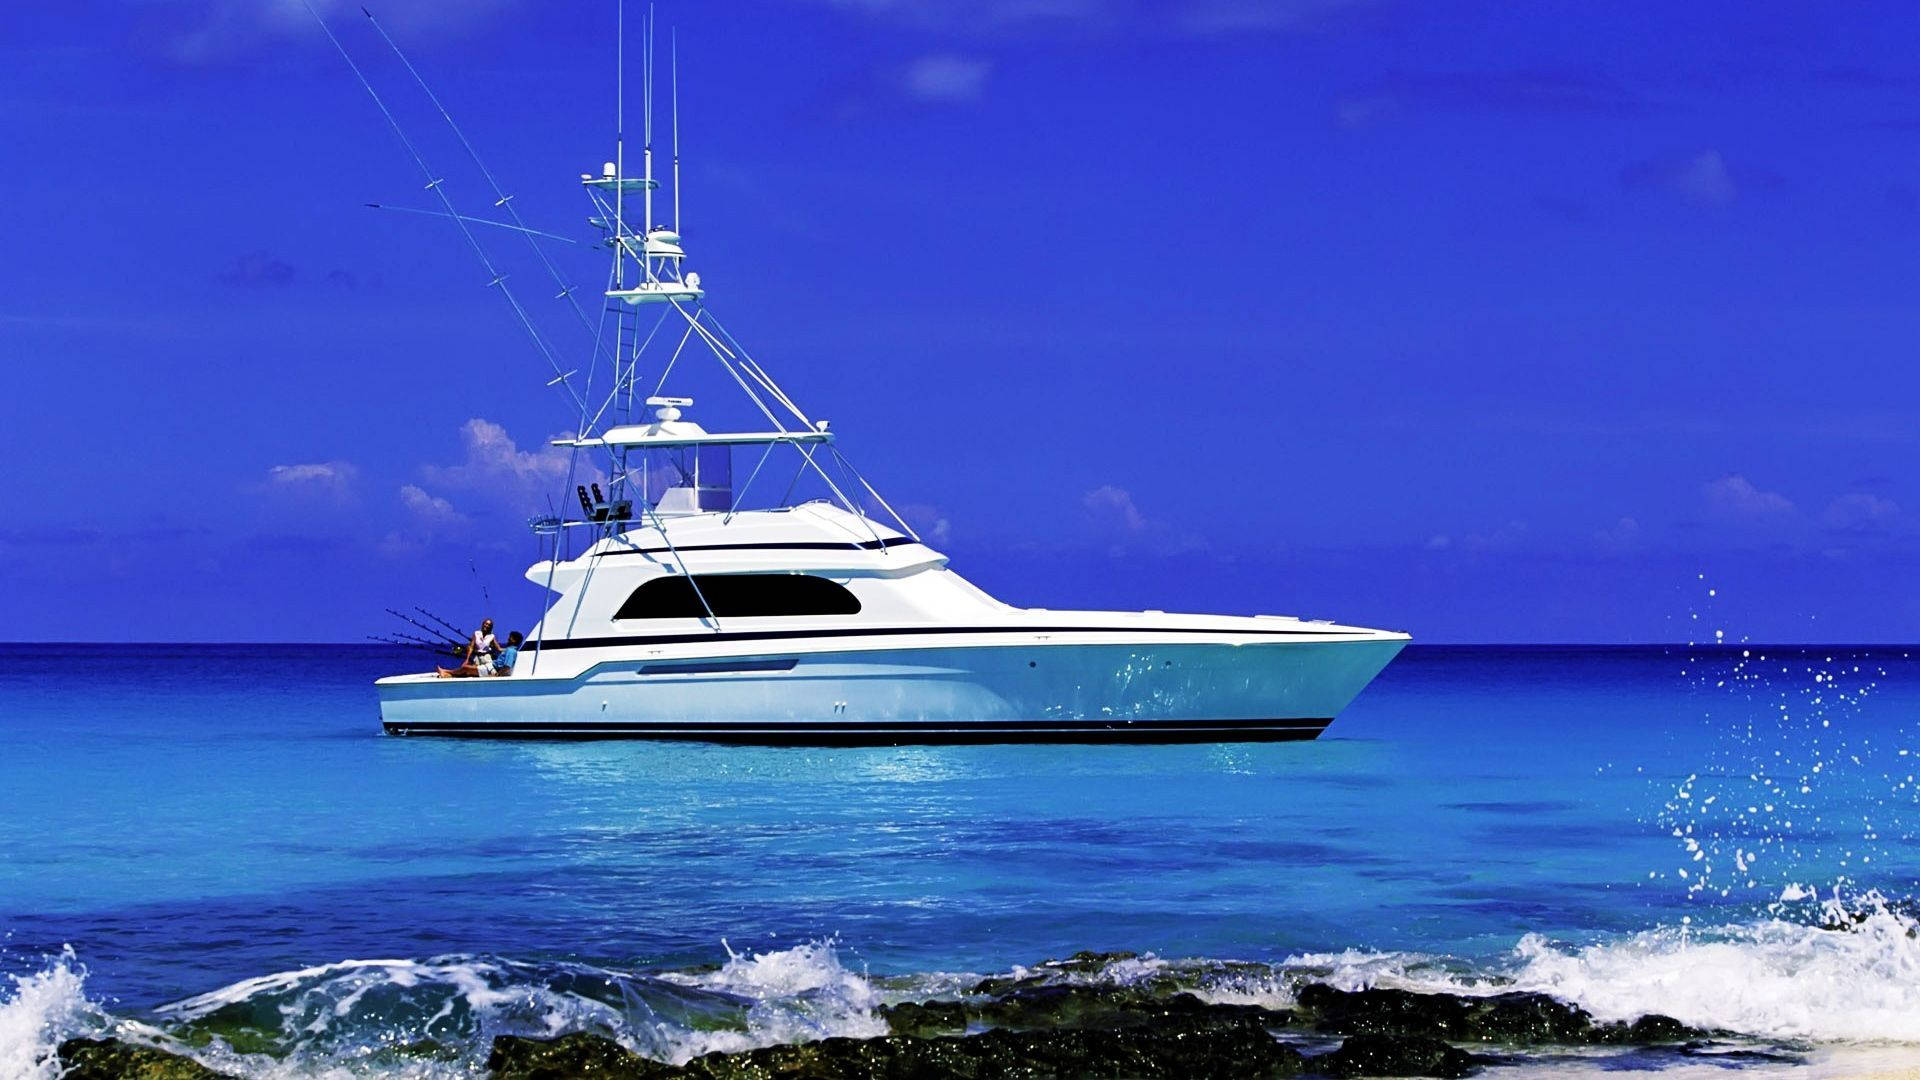 Luxury Boat On Blue Sea Background